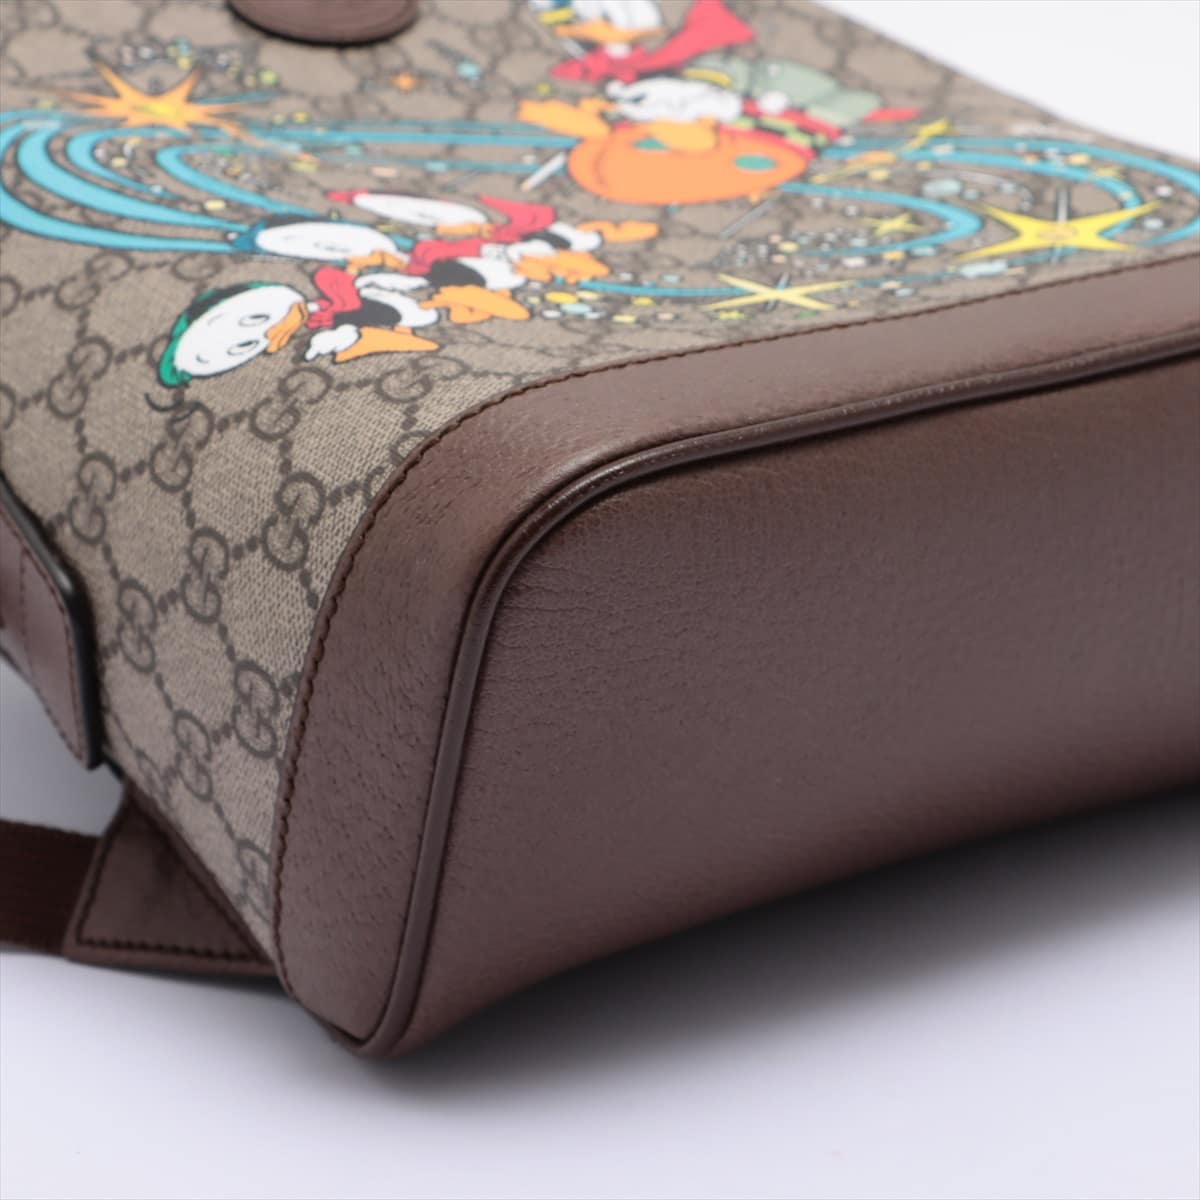 Gucci x Disney GG Supreme Pack / backpack Beige 552884